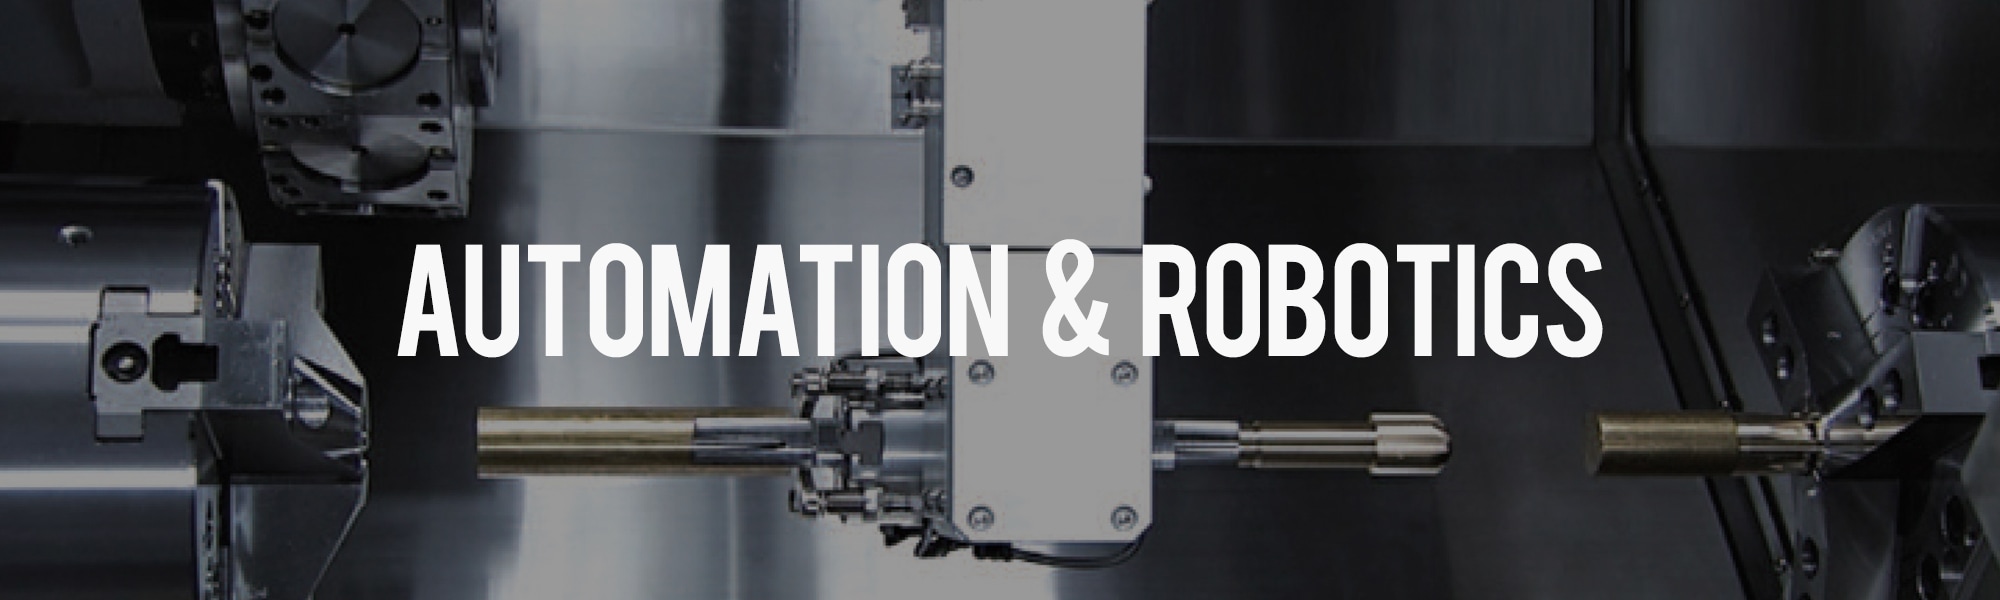 ganesh automation & robotics